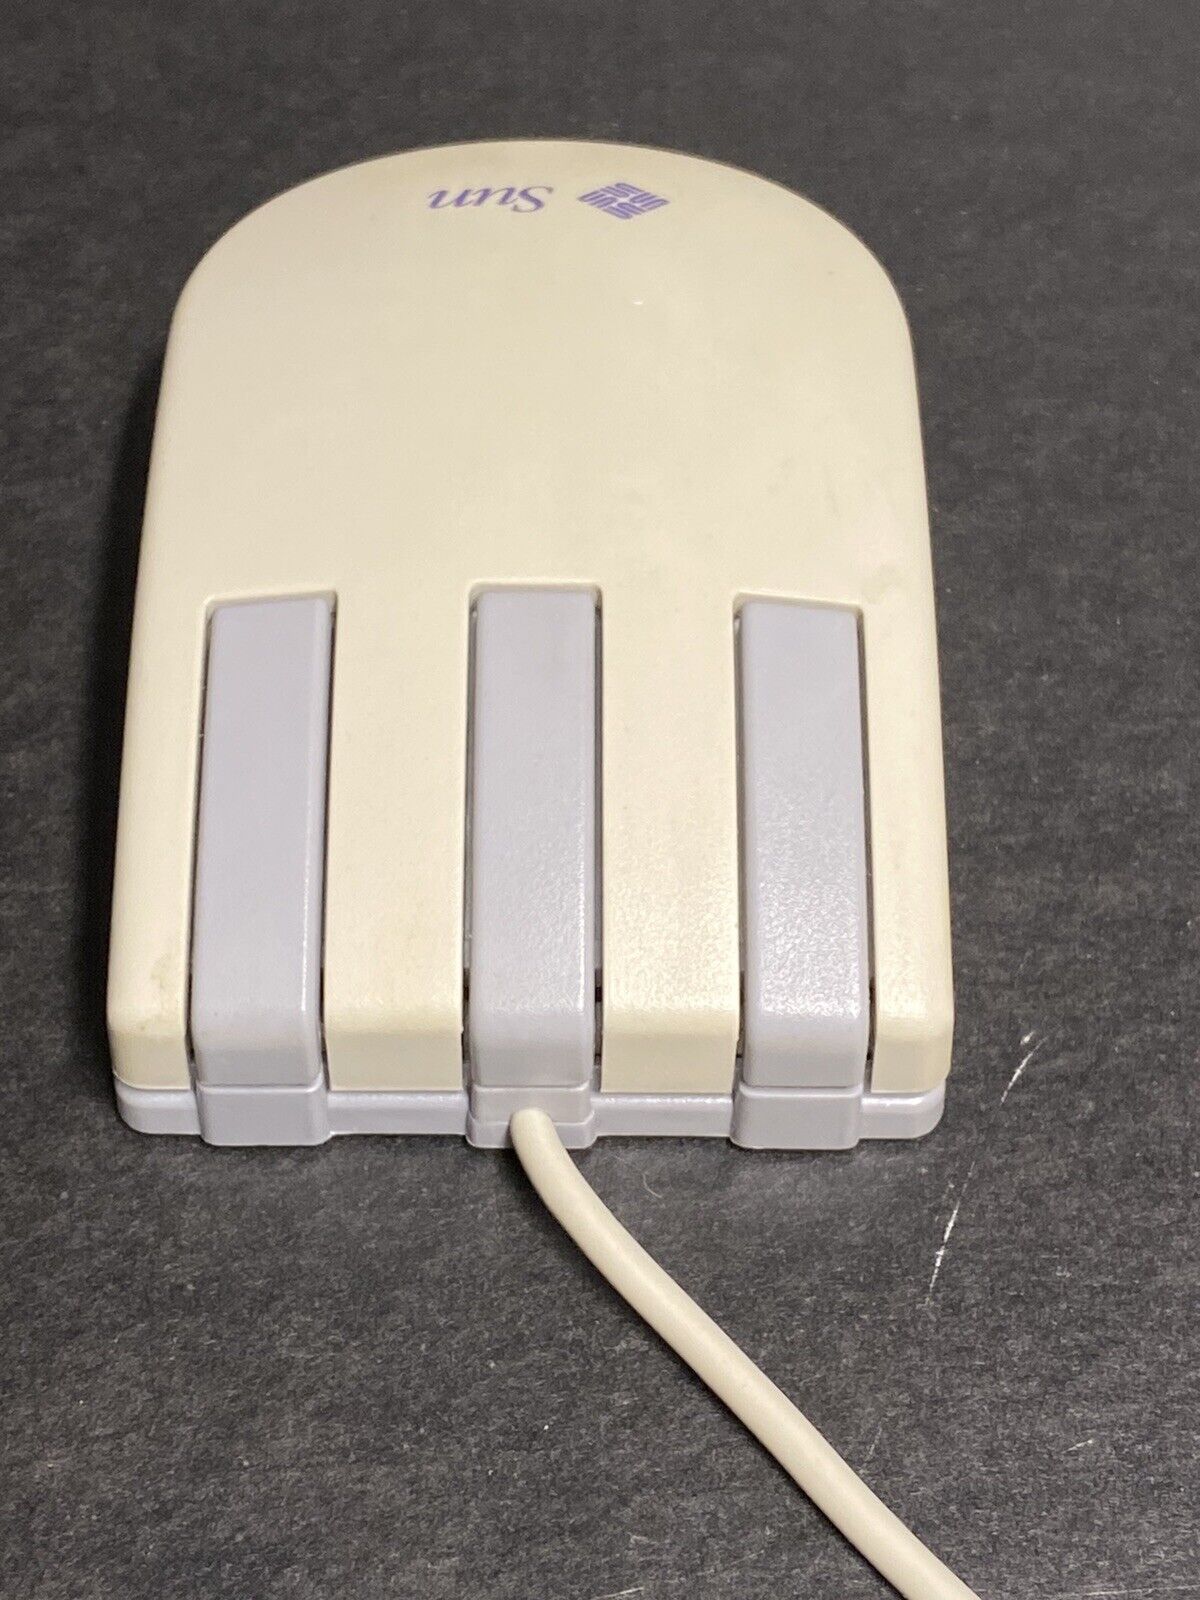 SUN 370-1586 Type-5c Mechanical 3 Button Mouse Model Compact1 Mouse